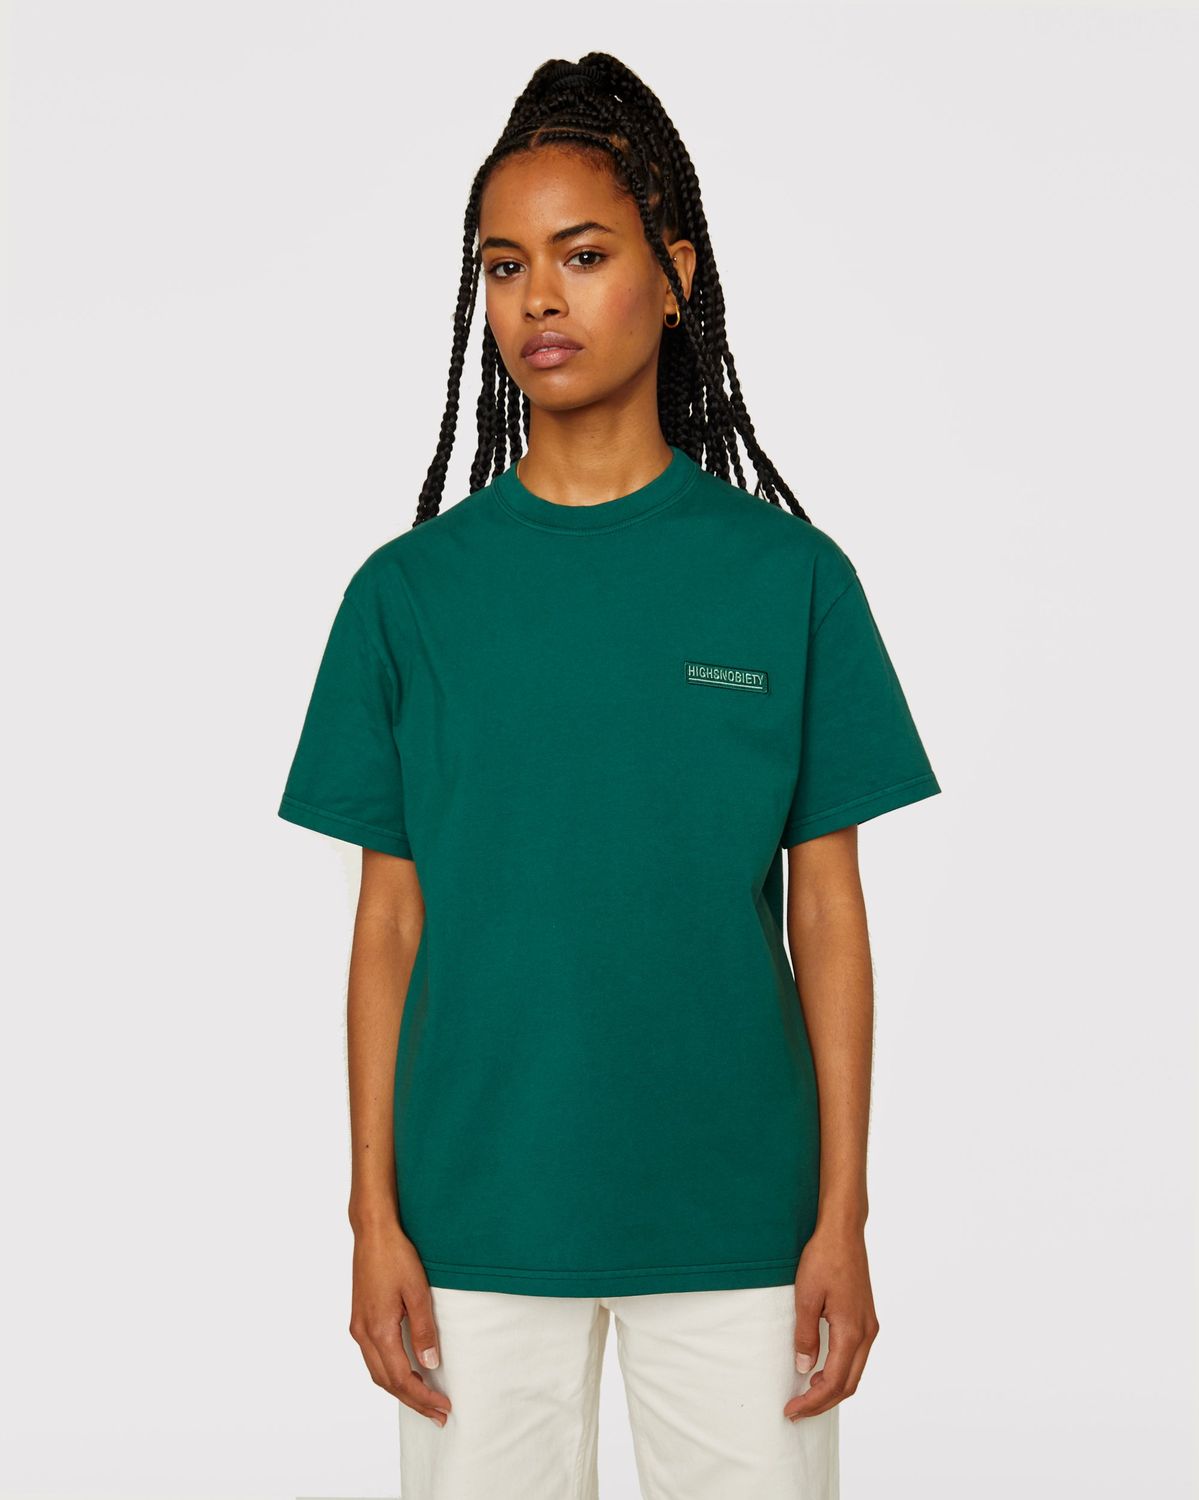 Highsnobiety – Staples T-Shirt Green - Tops - Green - Image 6